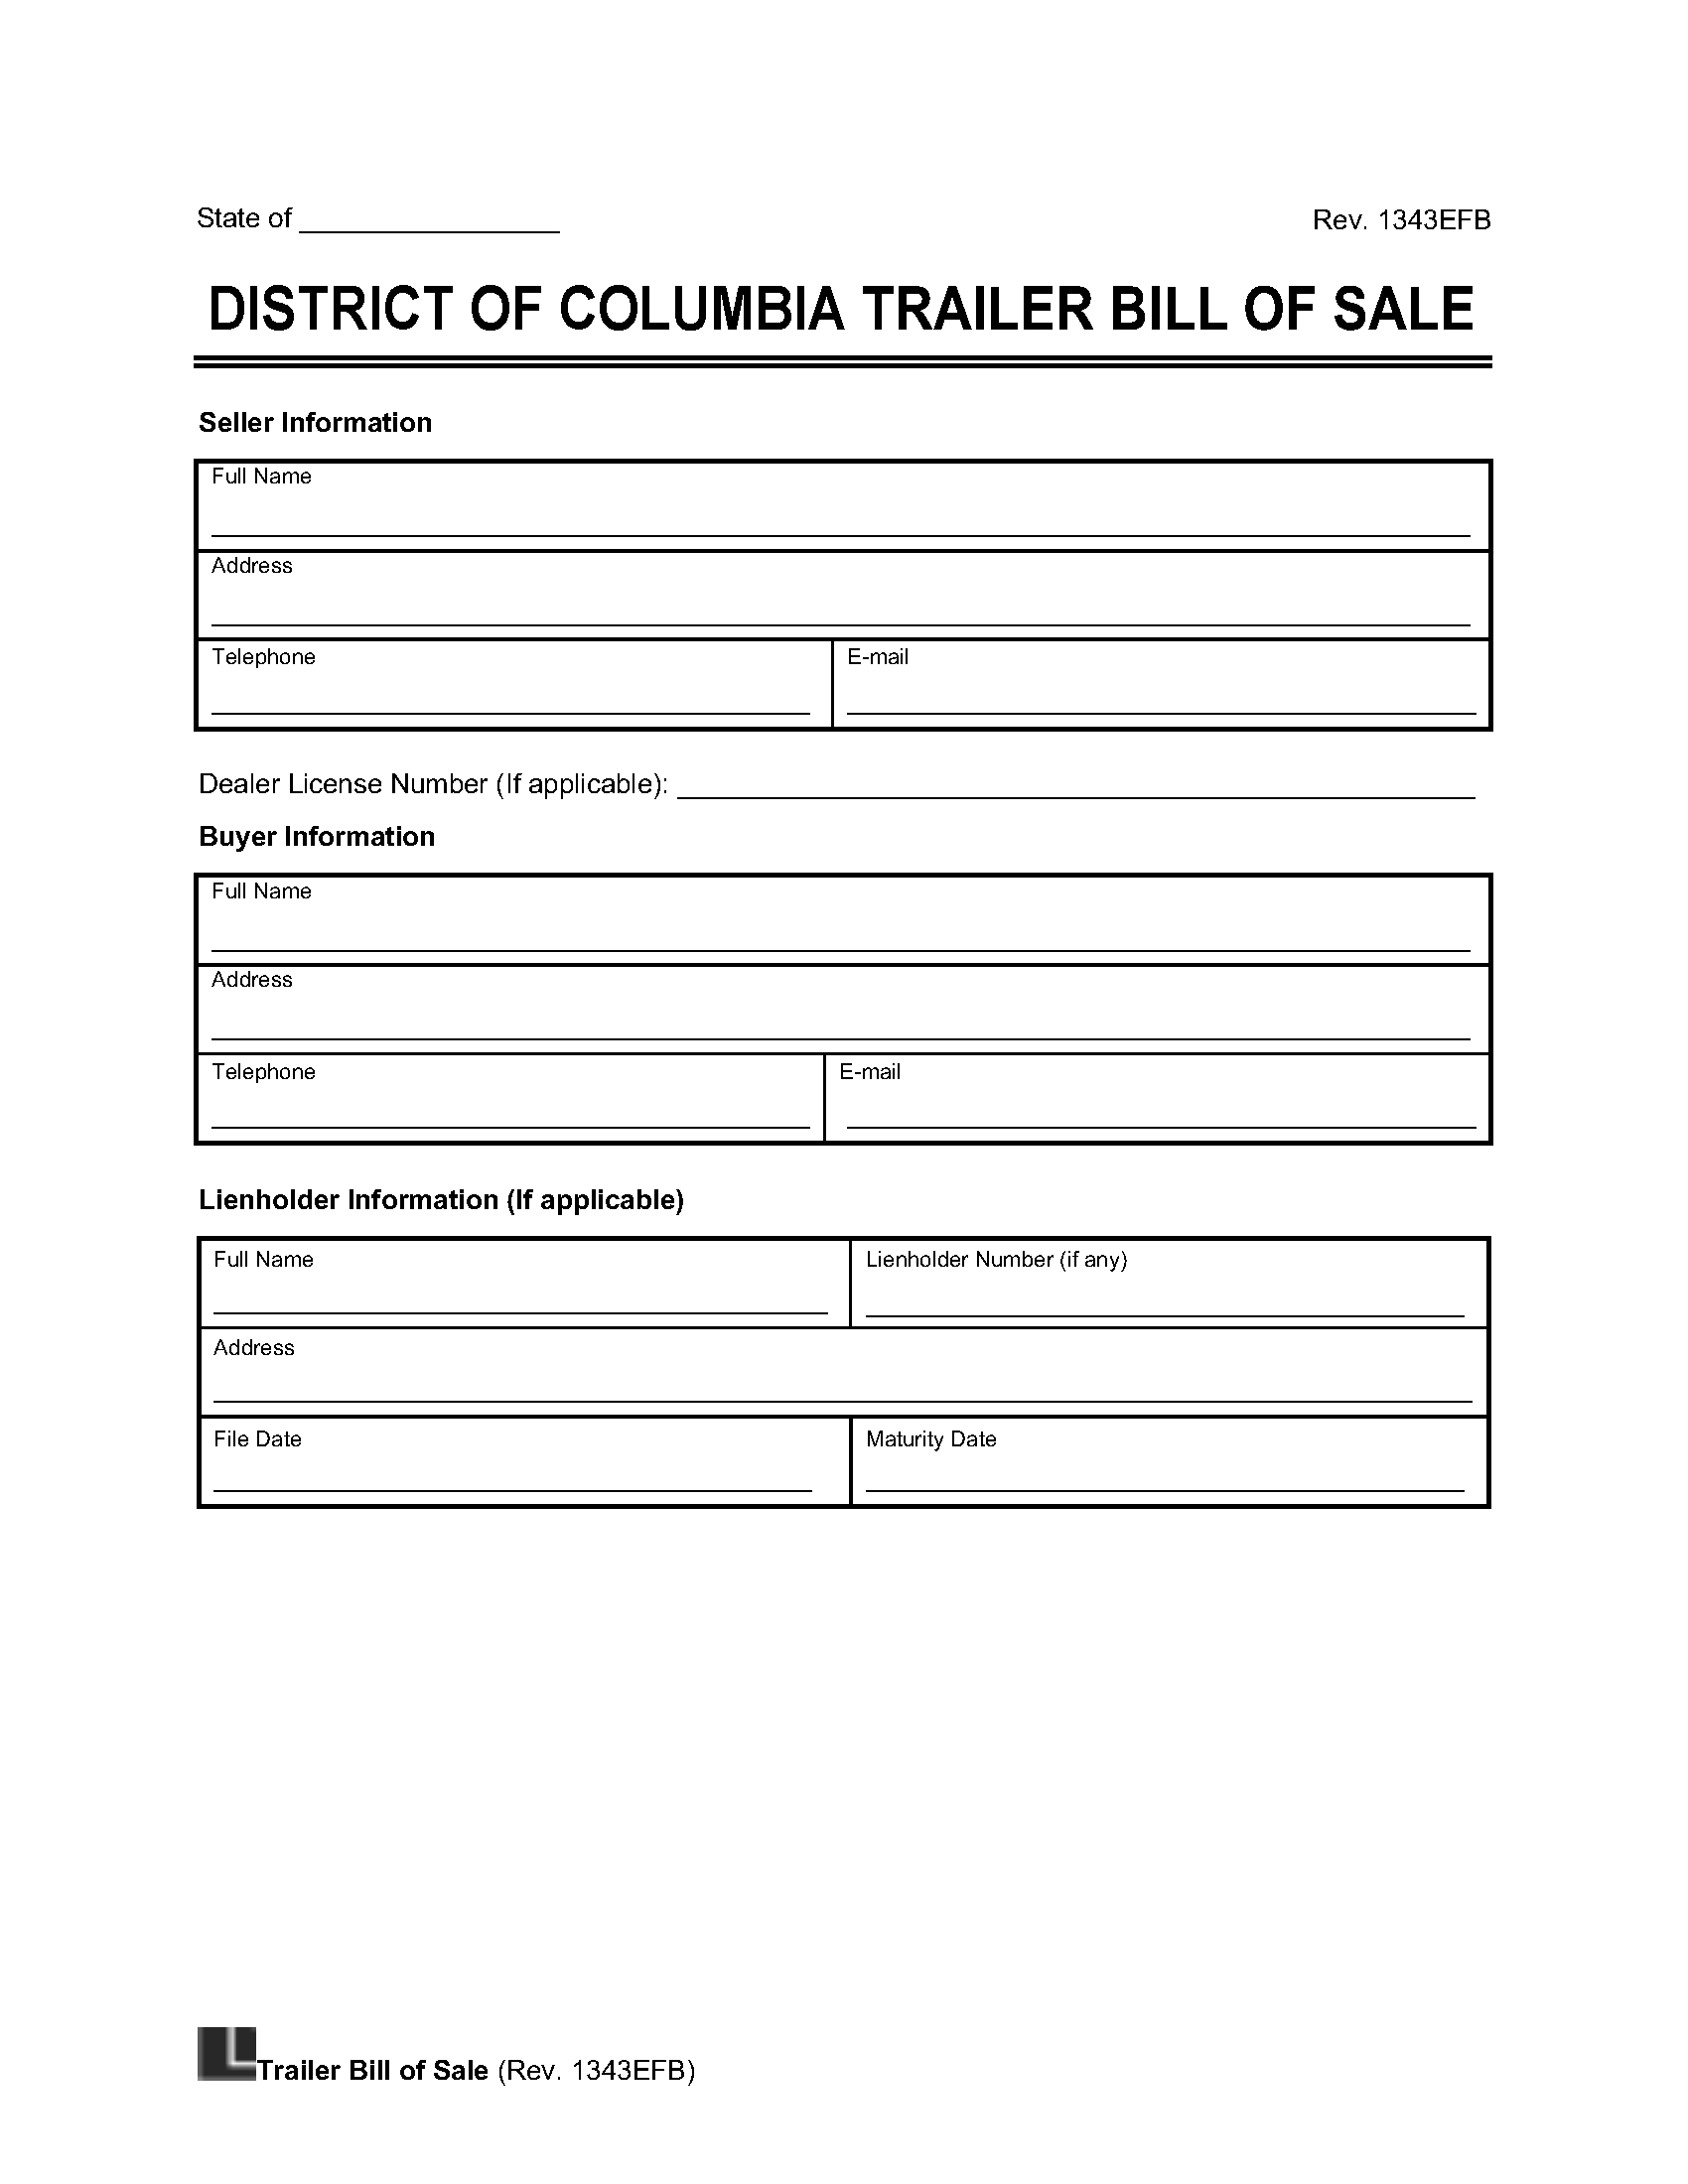 District of Columbia Trailer Bill of Sale screenshot